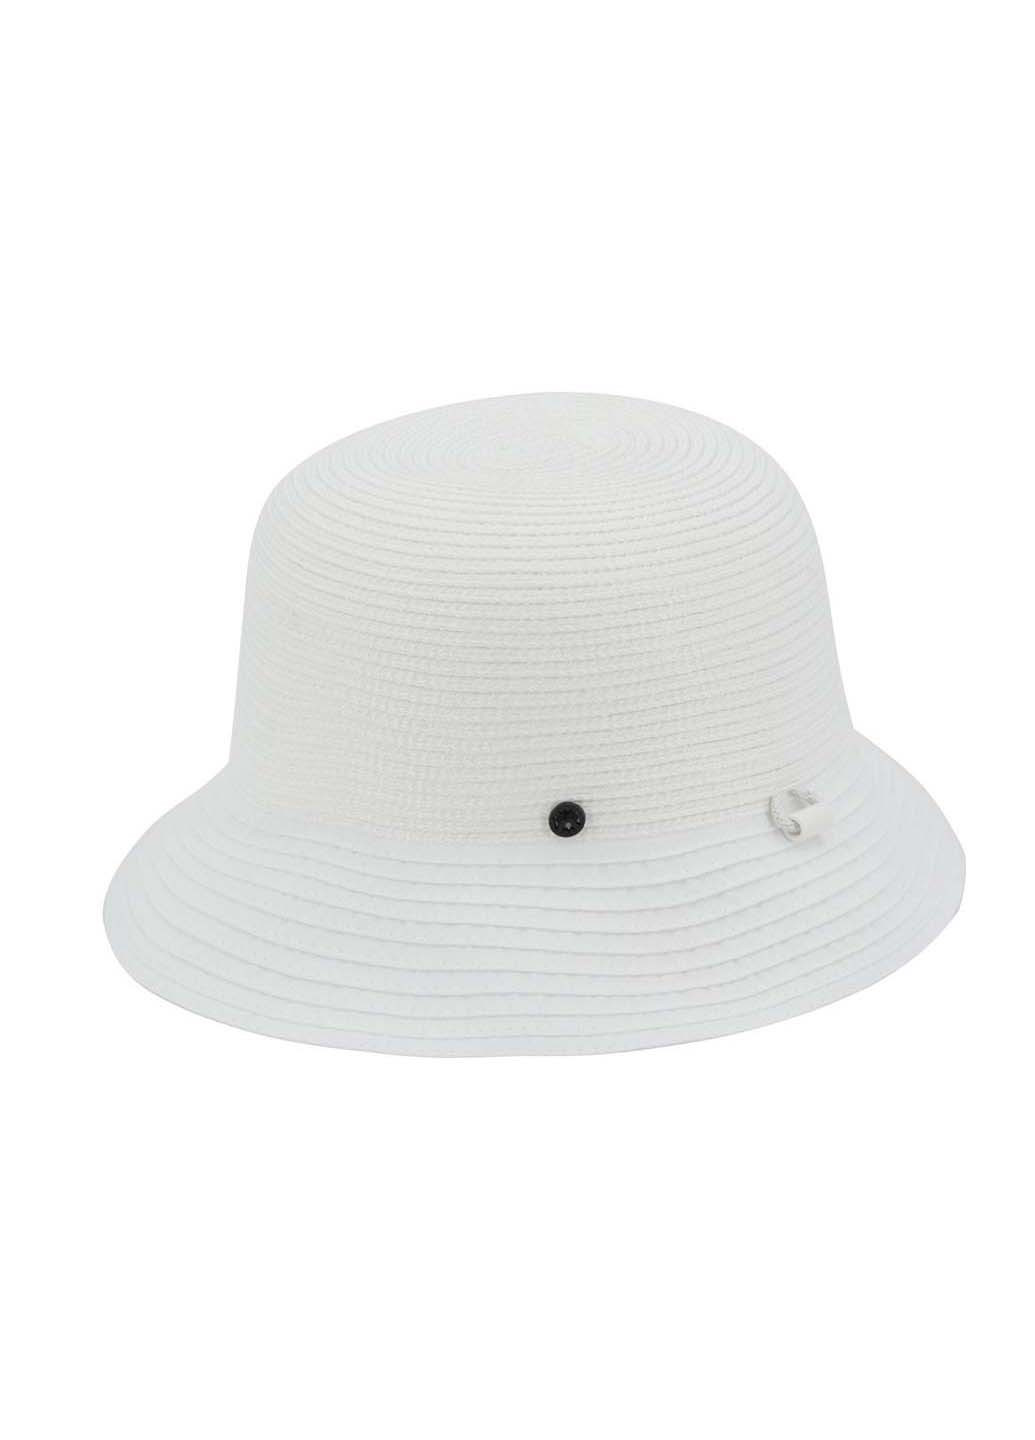 Шляпа Del Mare никс (253184316)